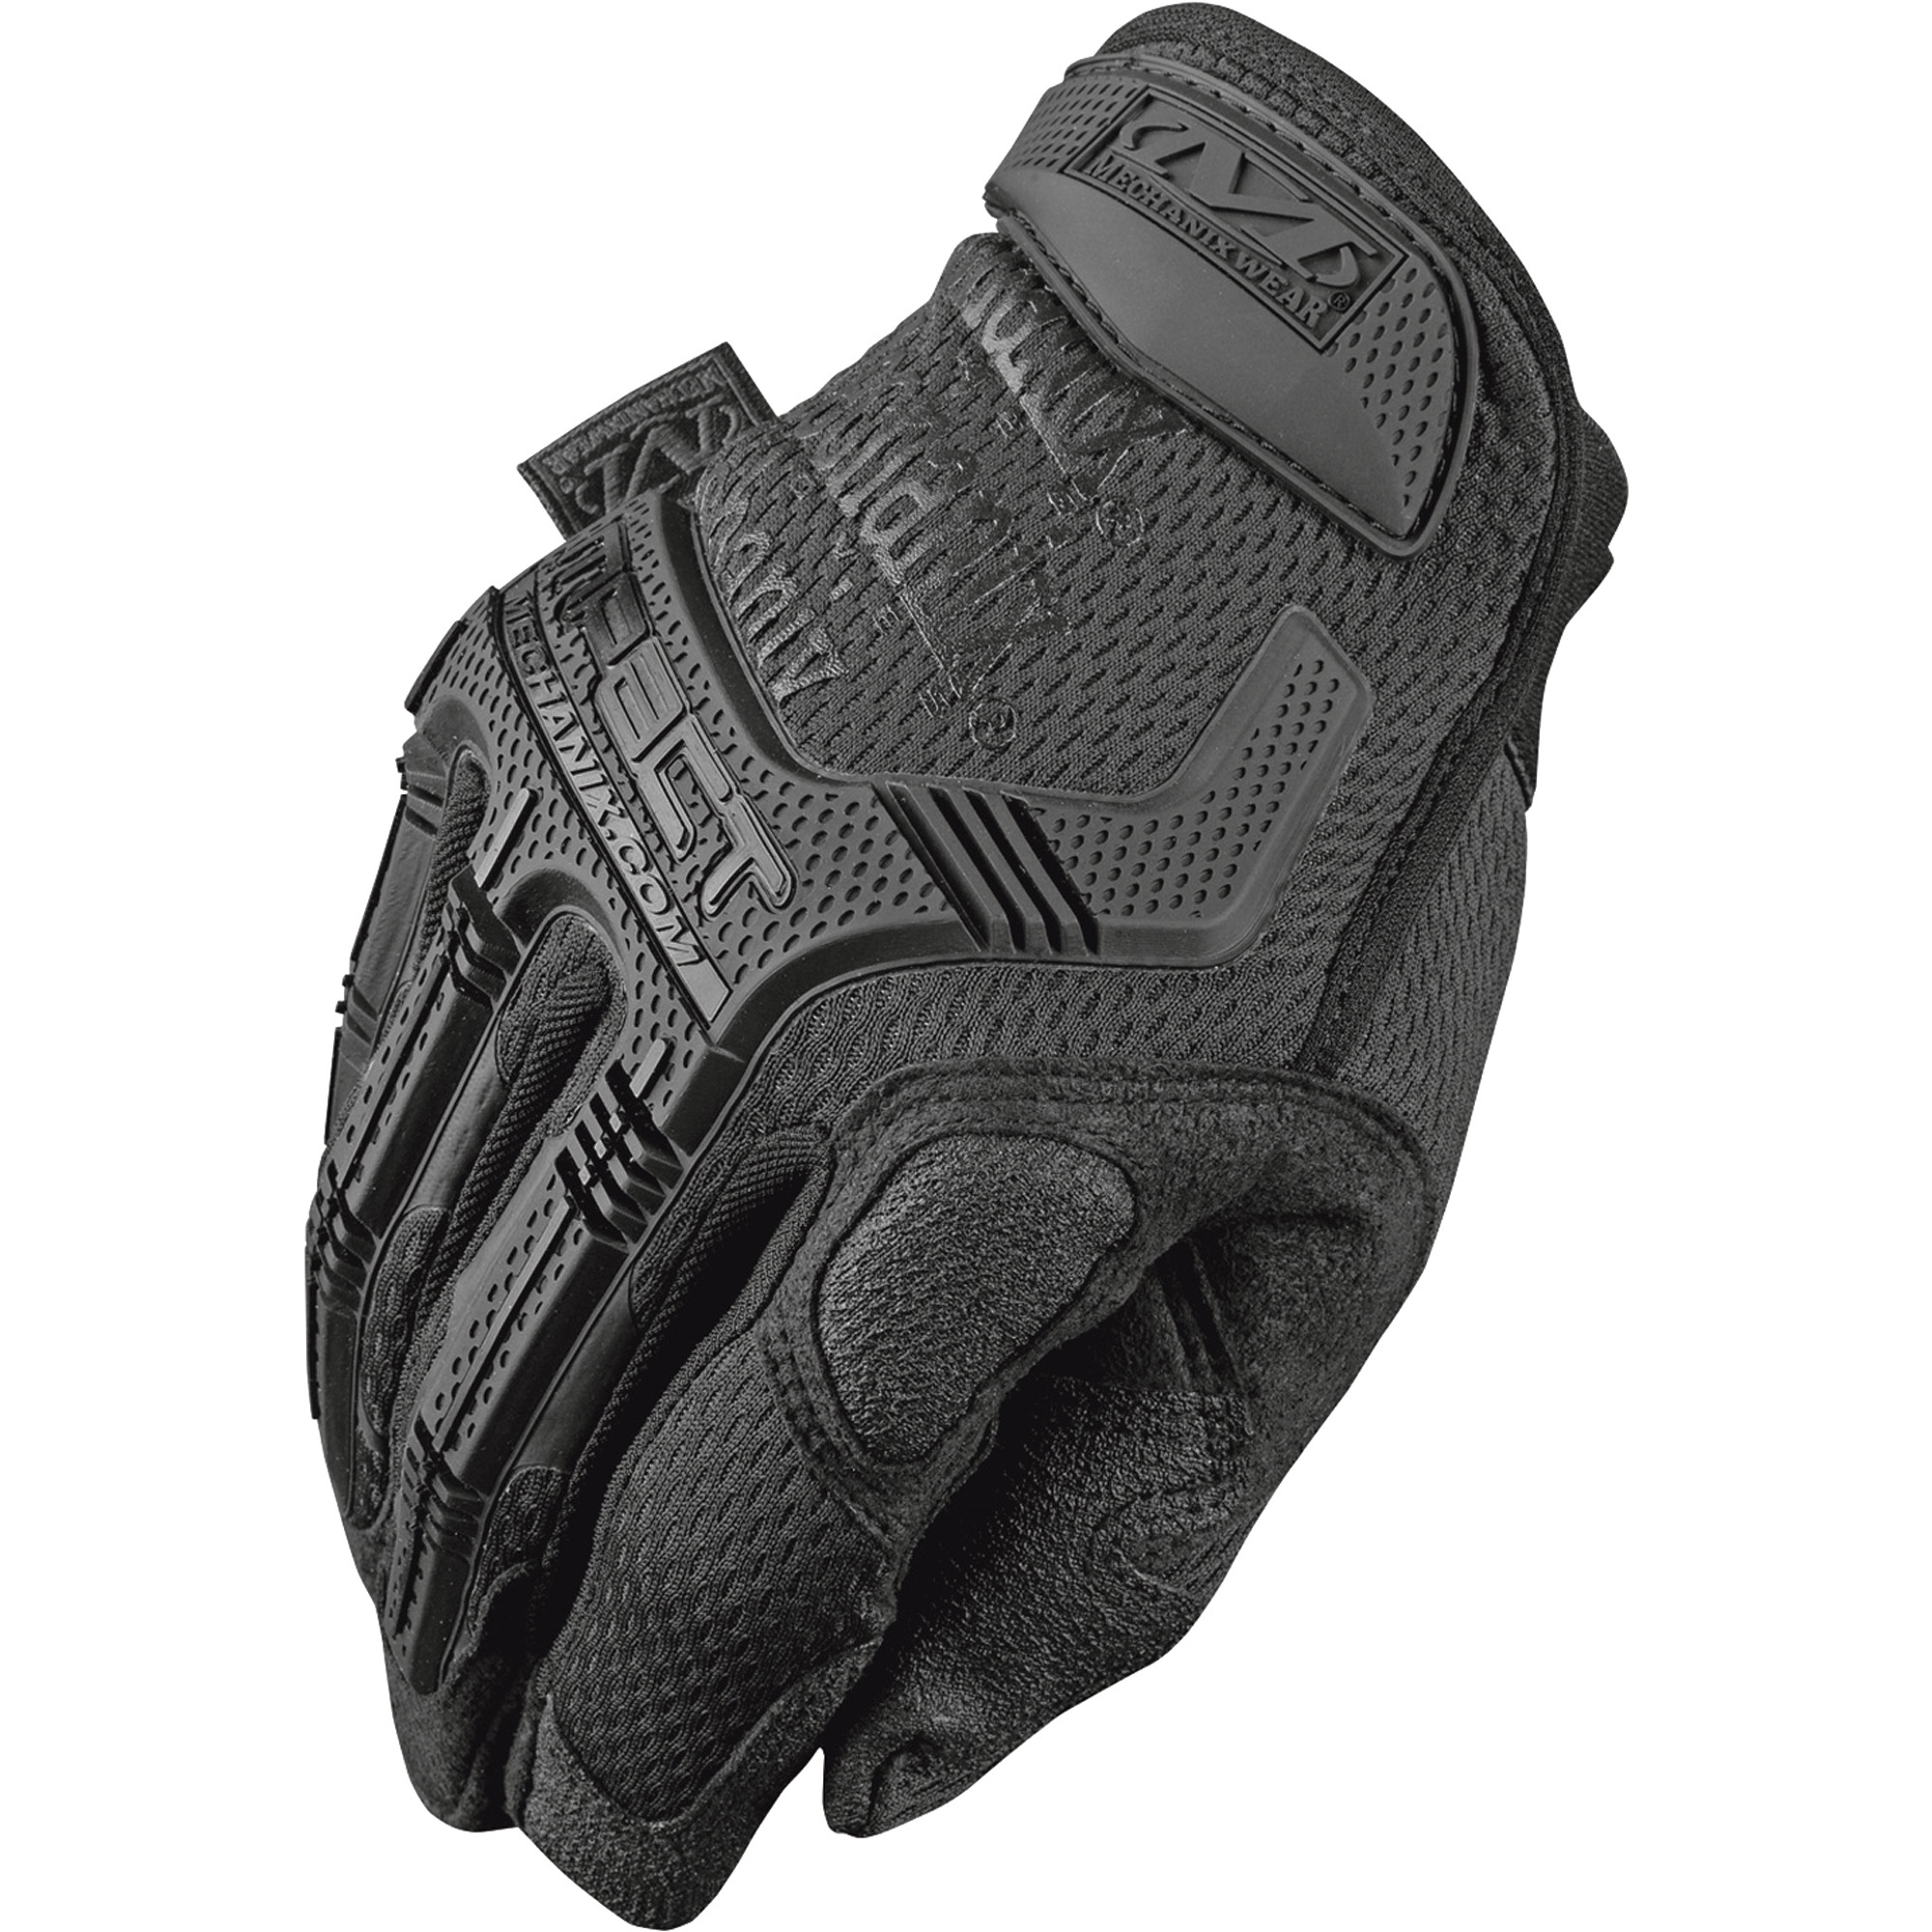 Mechanix Men's Wear M-Pact Glove - Covert, Large, Model MPT-55-010